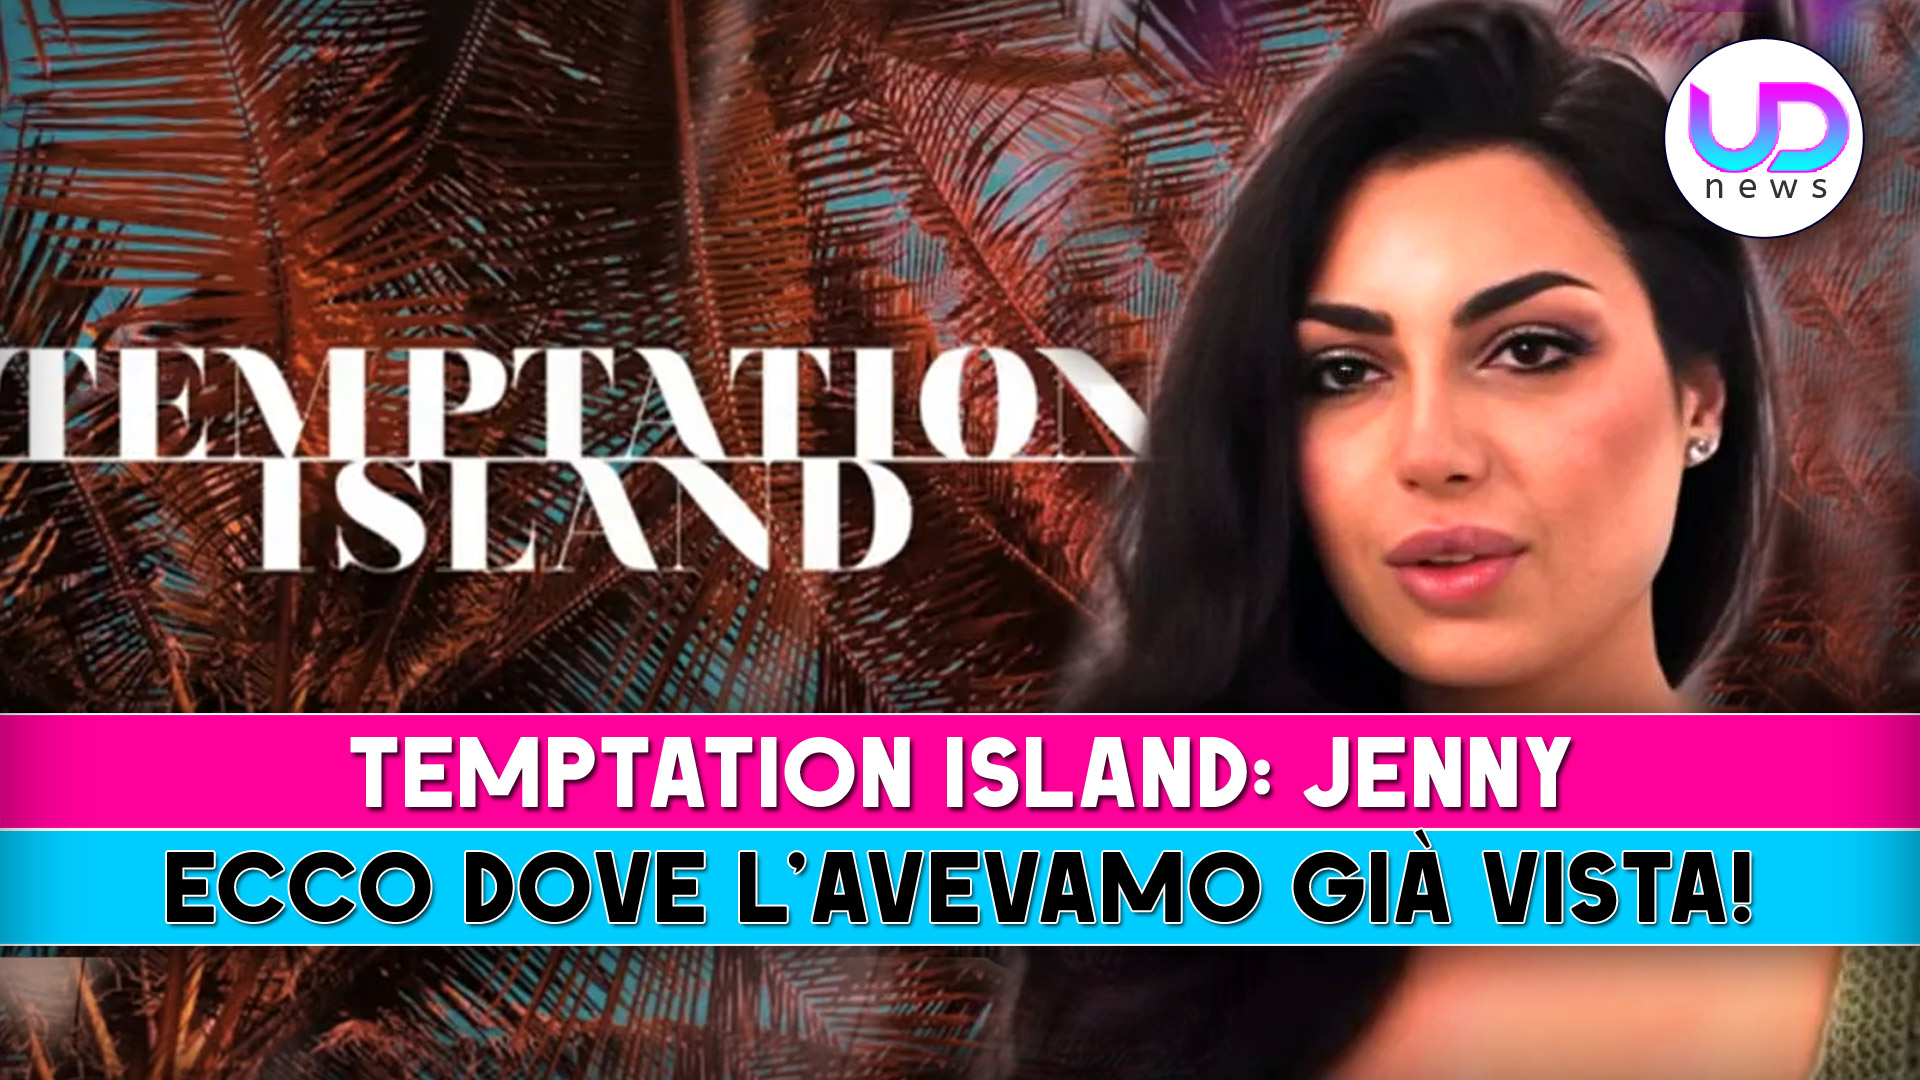 Temptation Island, Jenny: Dove L’Avevamo Già Vista!